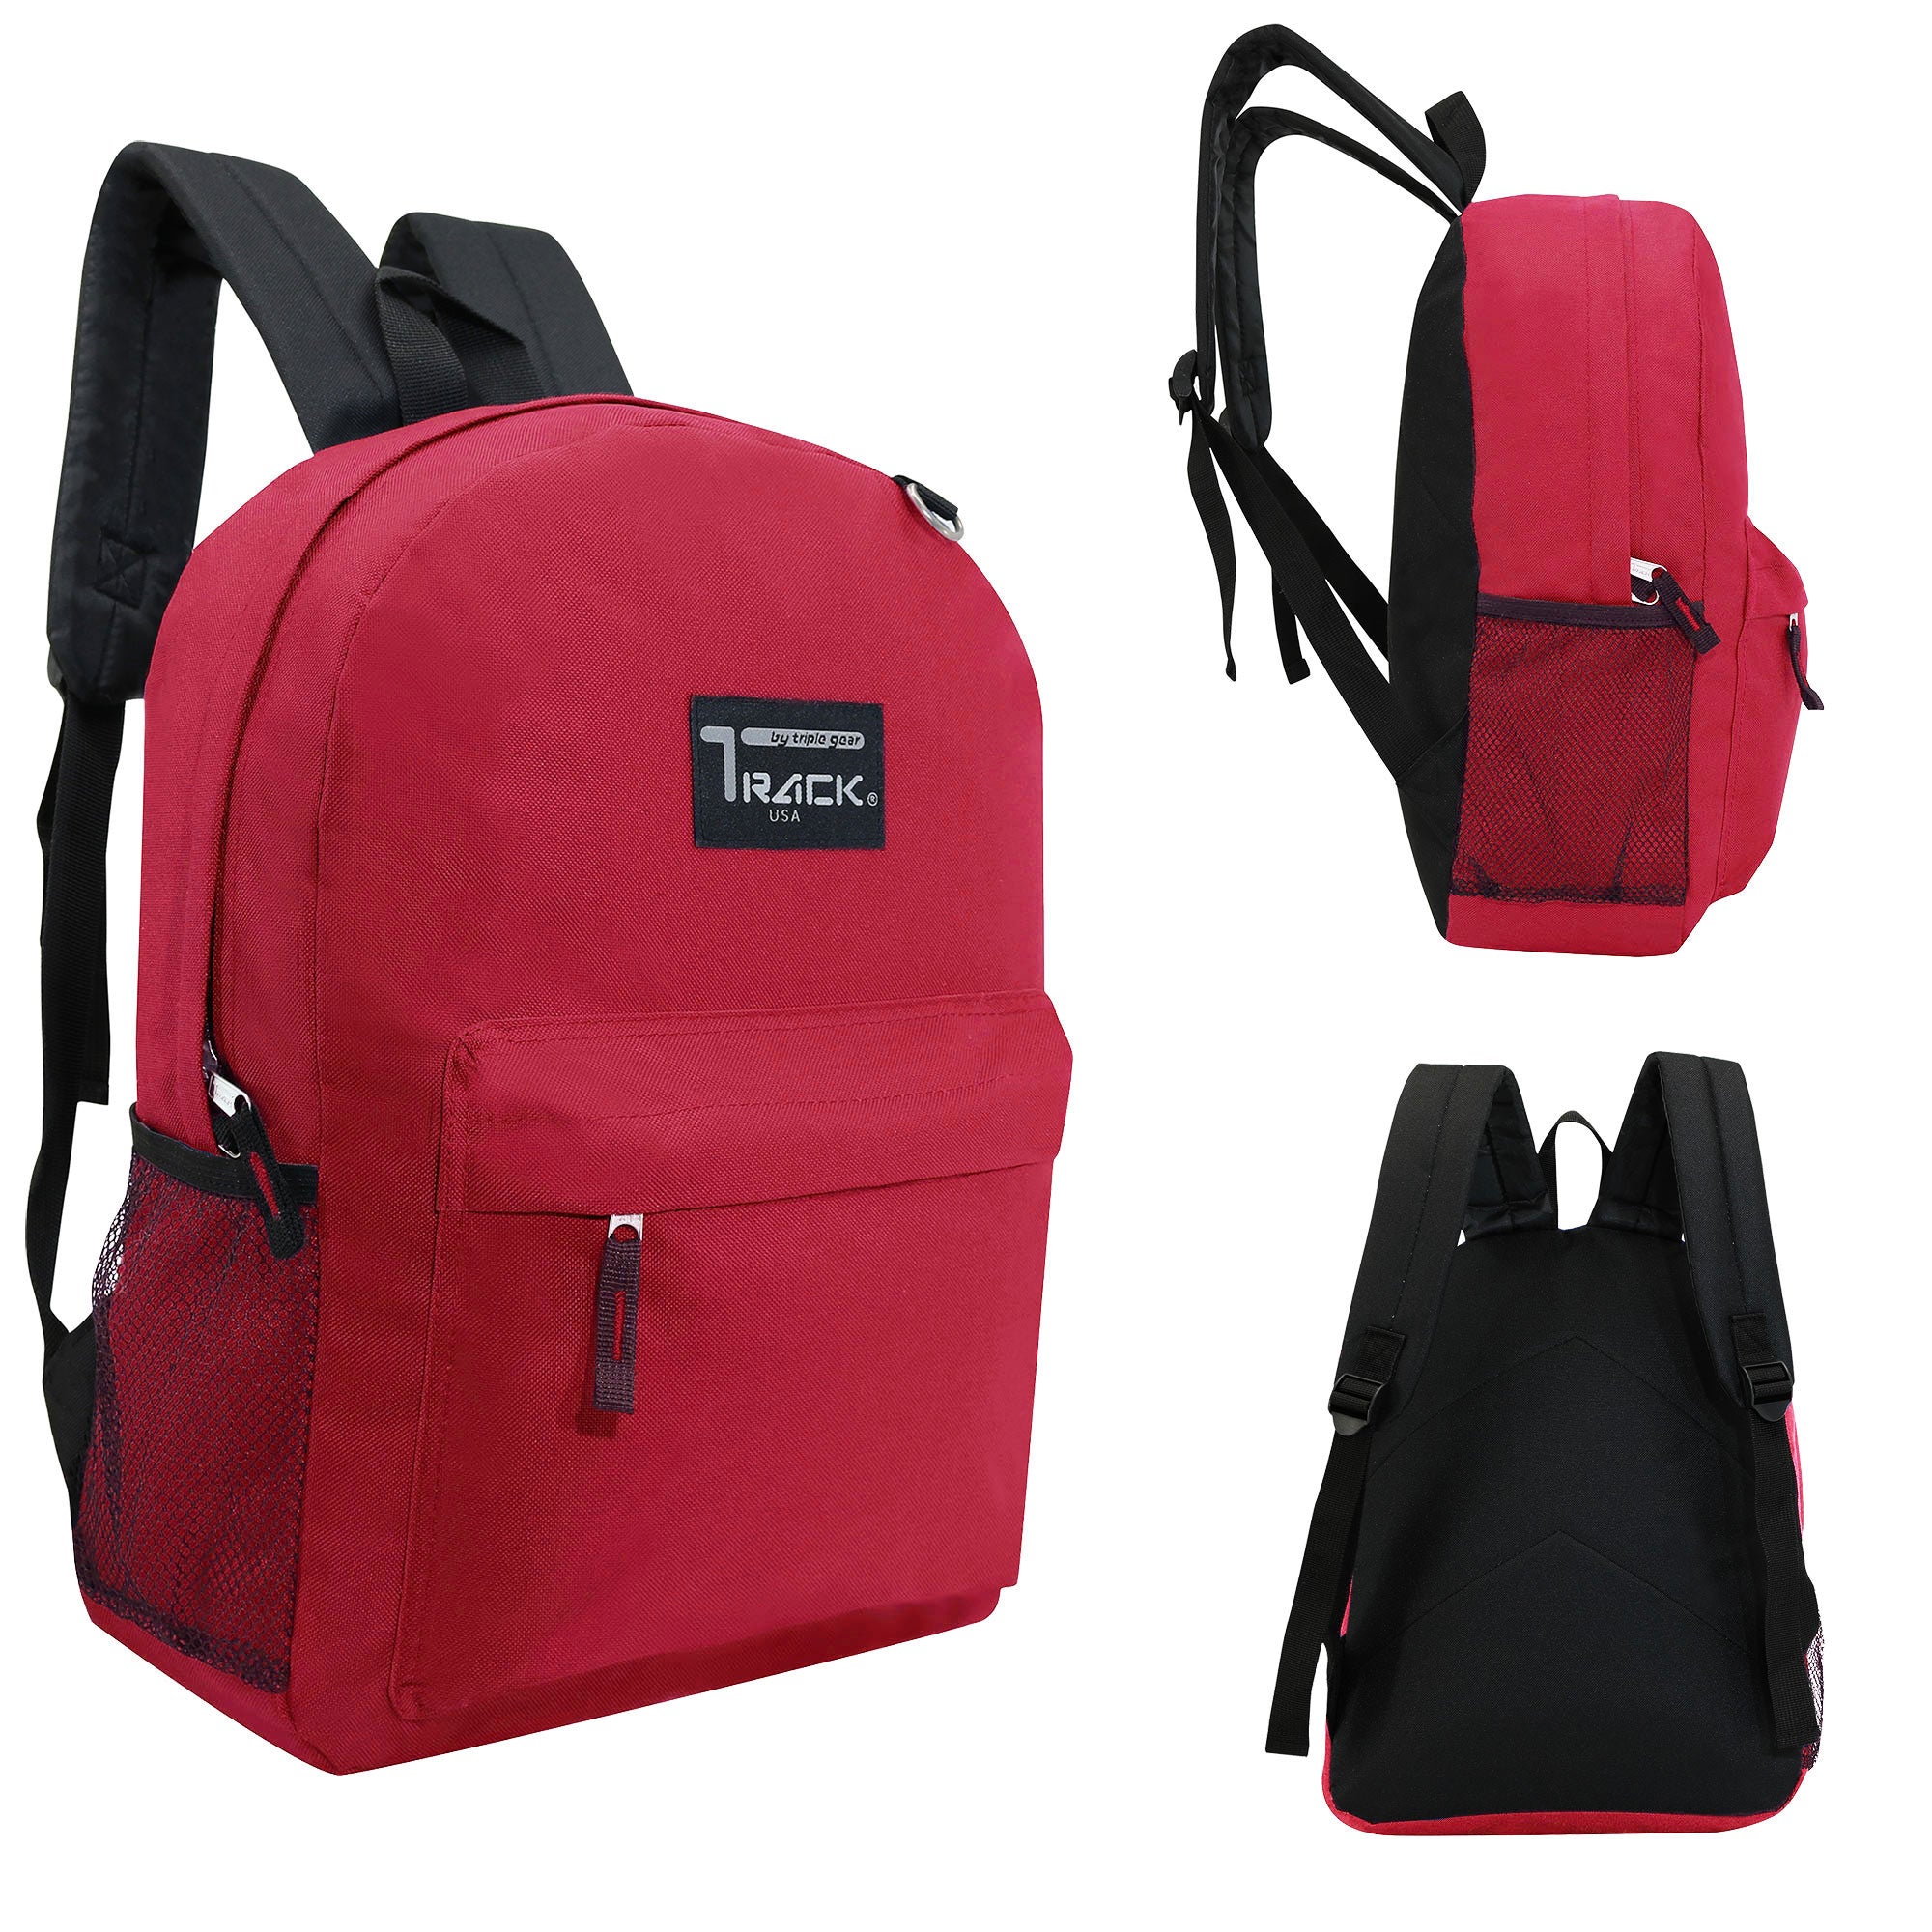 17" Kids Wholesale Backpacks In Red - Wholesale Case of 24 Bookbags